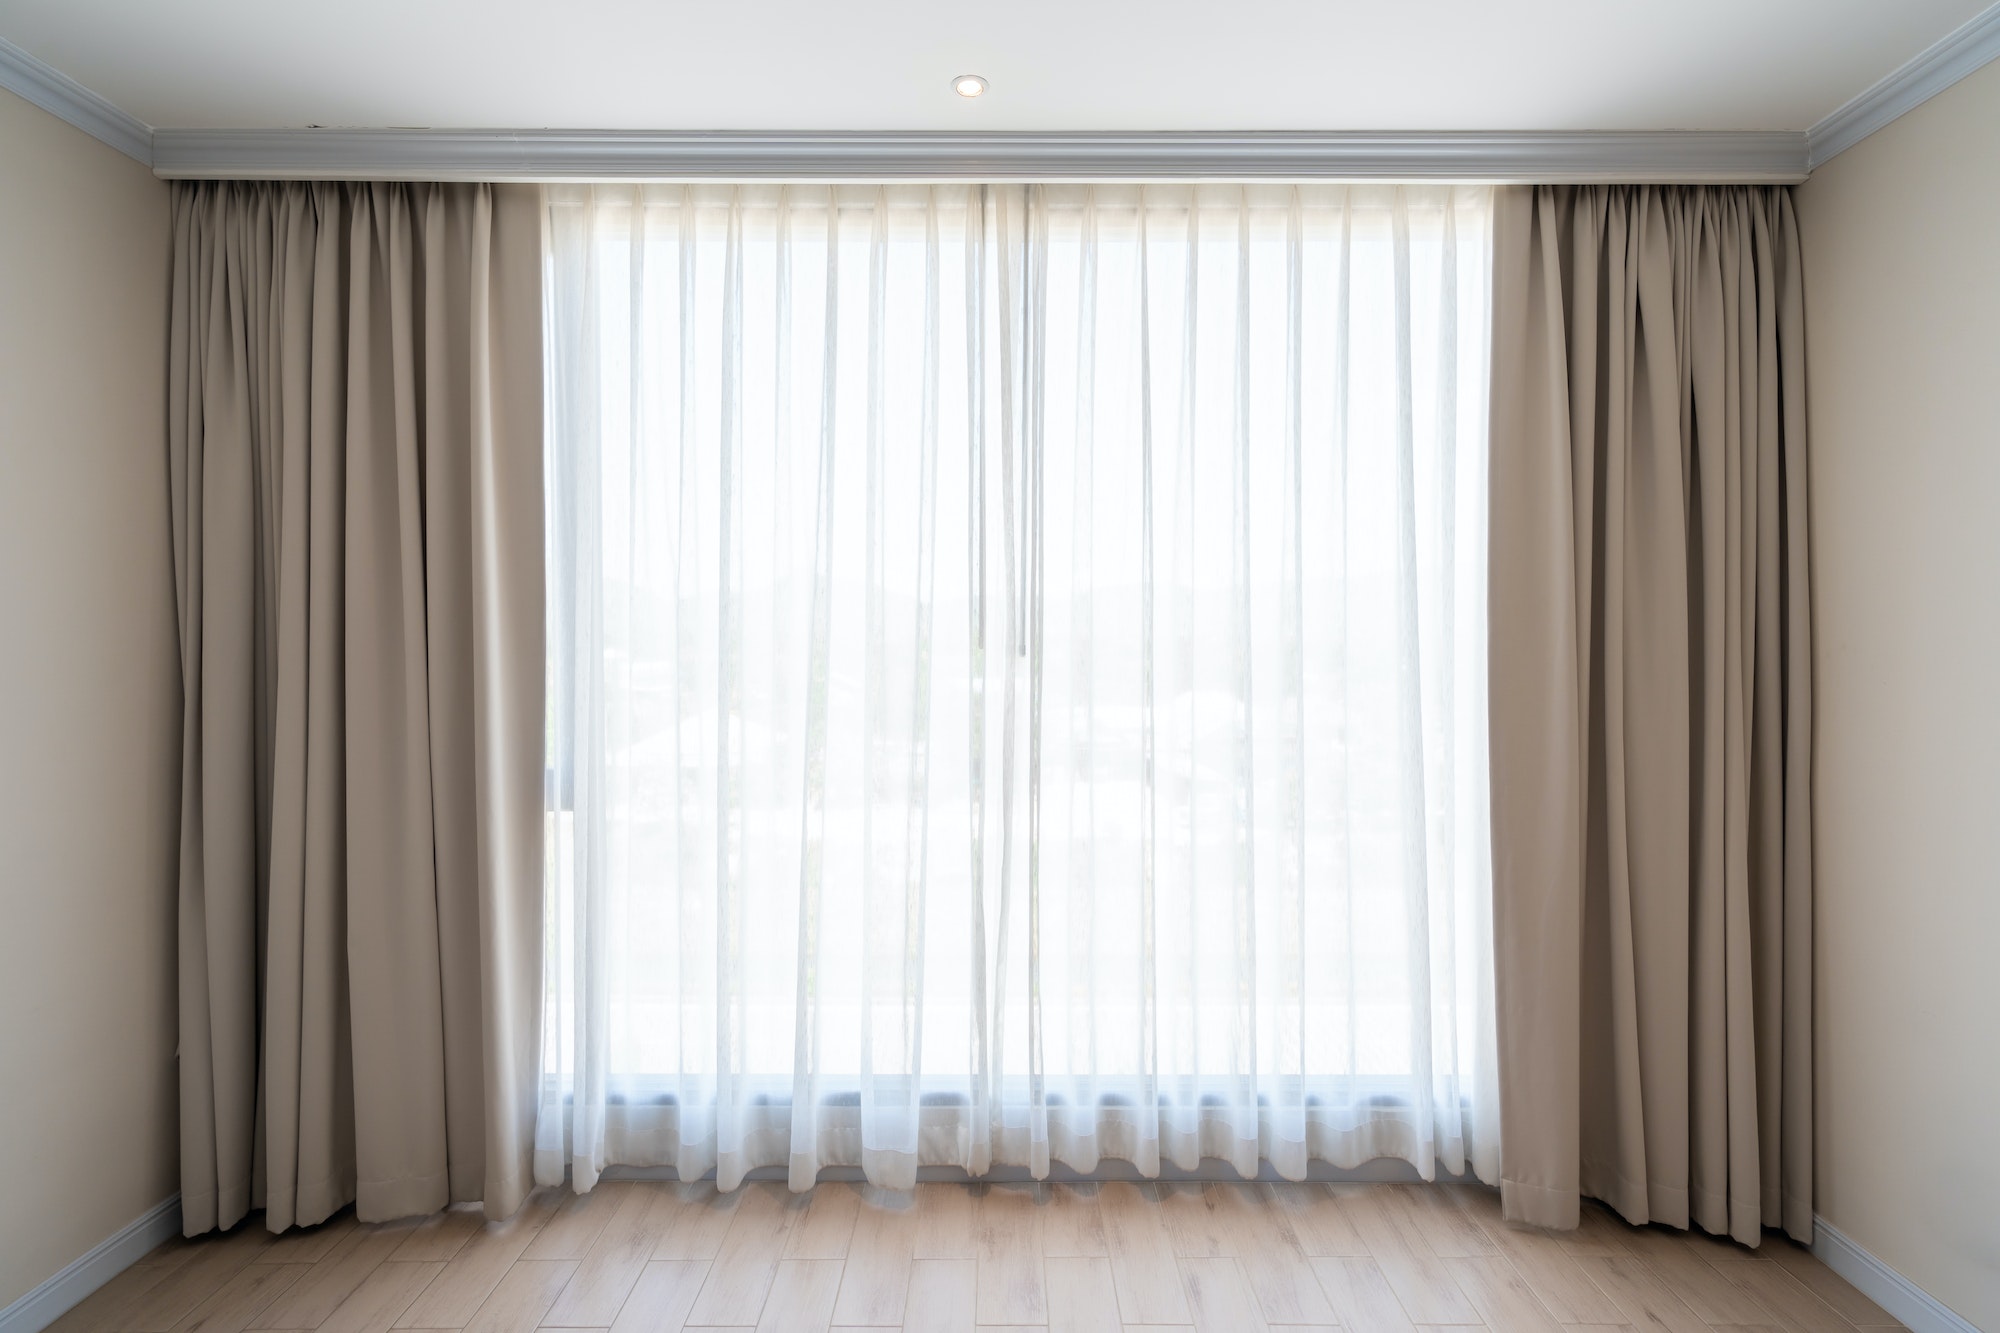 Interior decoration curtains in empty room